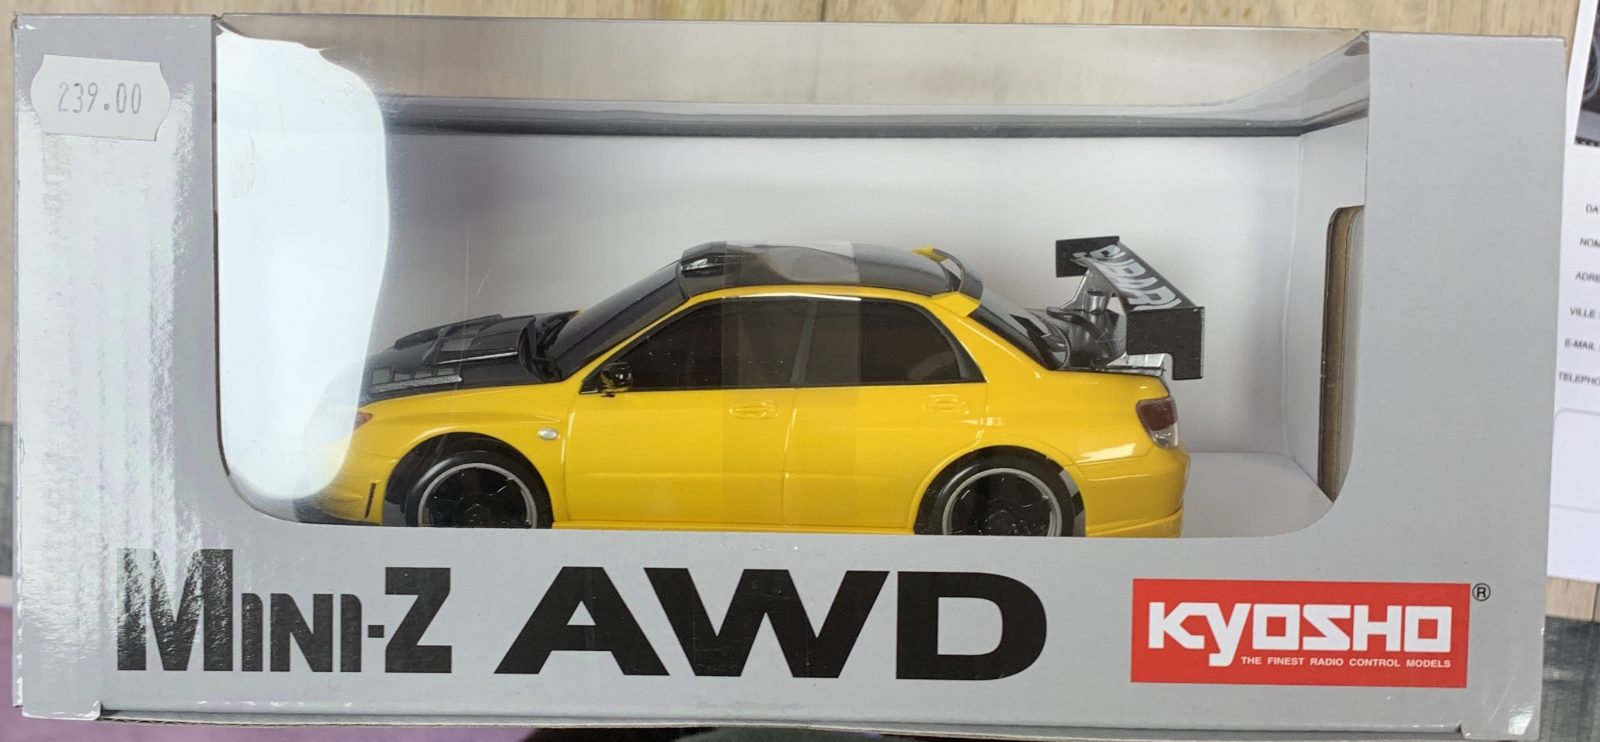 Mini-z AWD